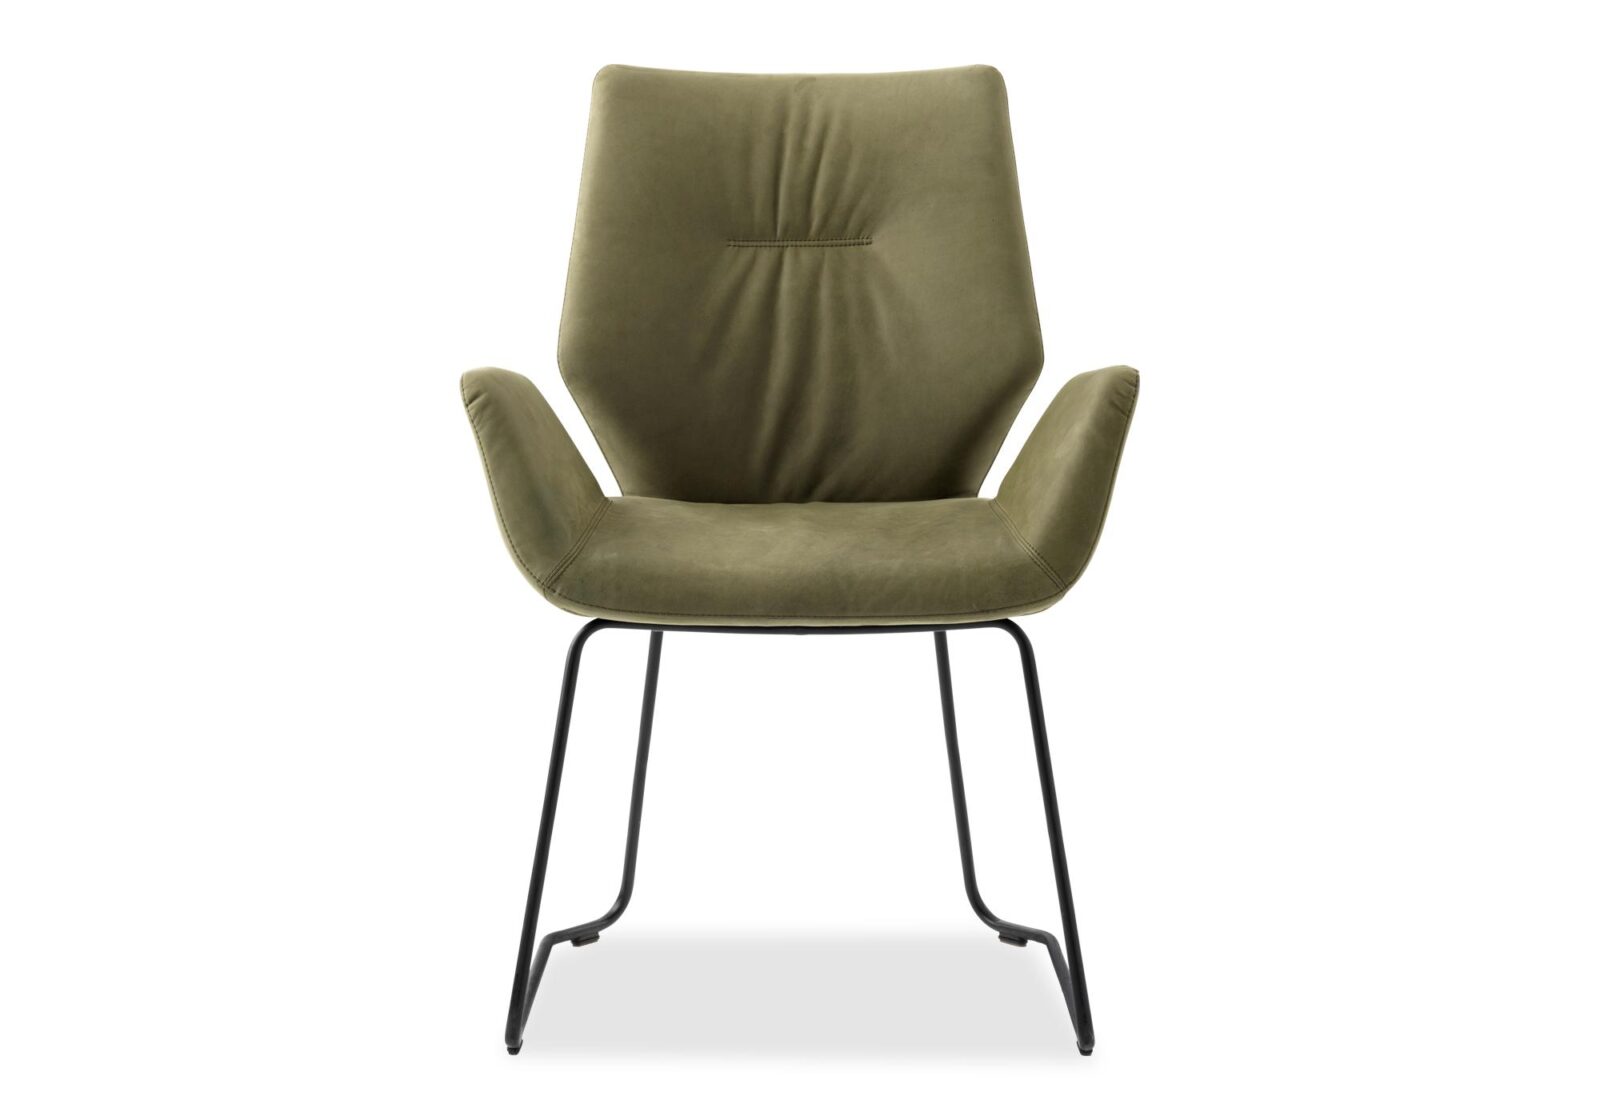 Stuhl mit Armlehne Mime. Bezug: Leder. Farbe: Dunkelgrün. Erhältlich bei Möbel Gallati.